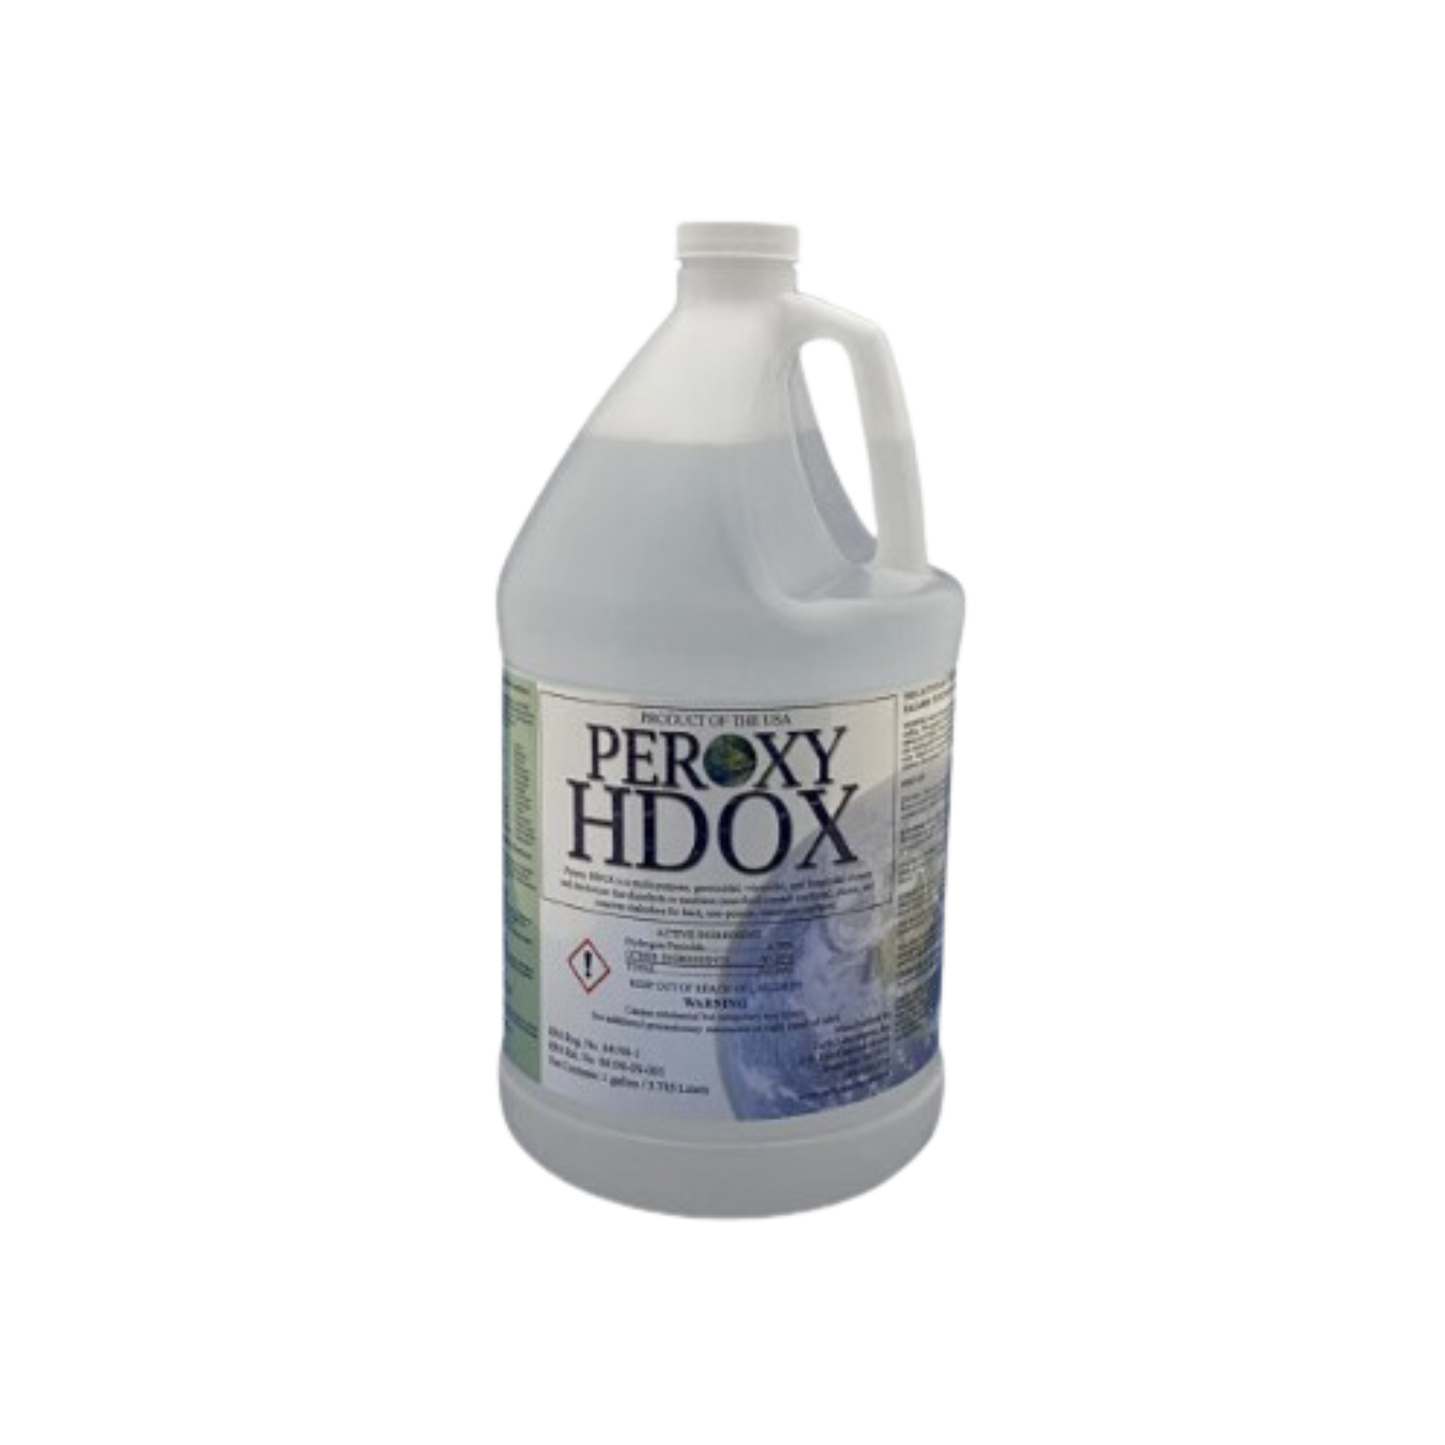 680960 - HDOX Peroxy 1 gal